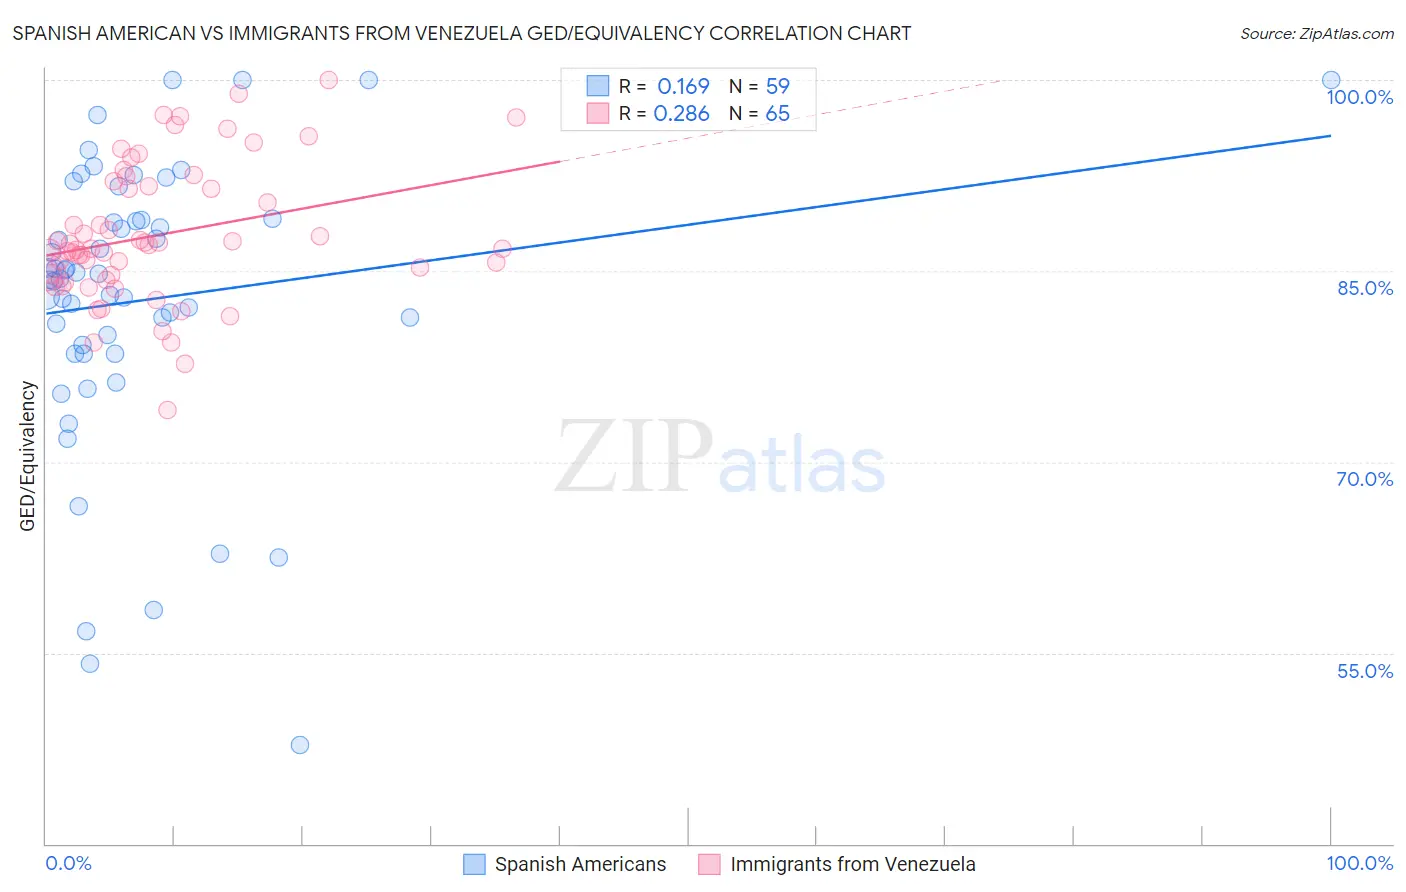 Spanish American vs Immigrants from Venezuela GED/Equivalency